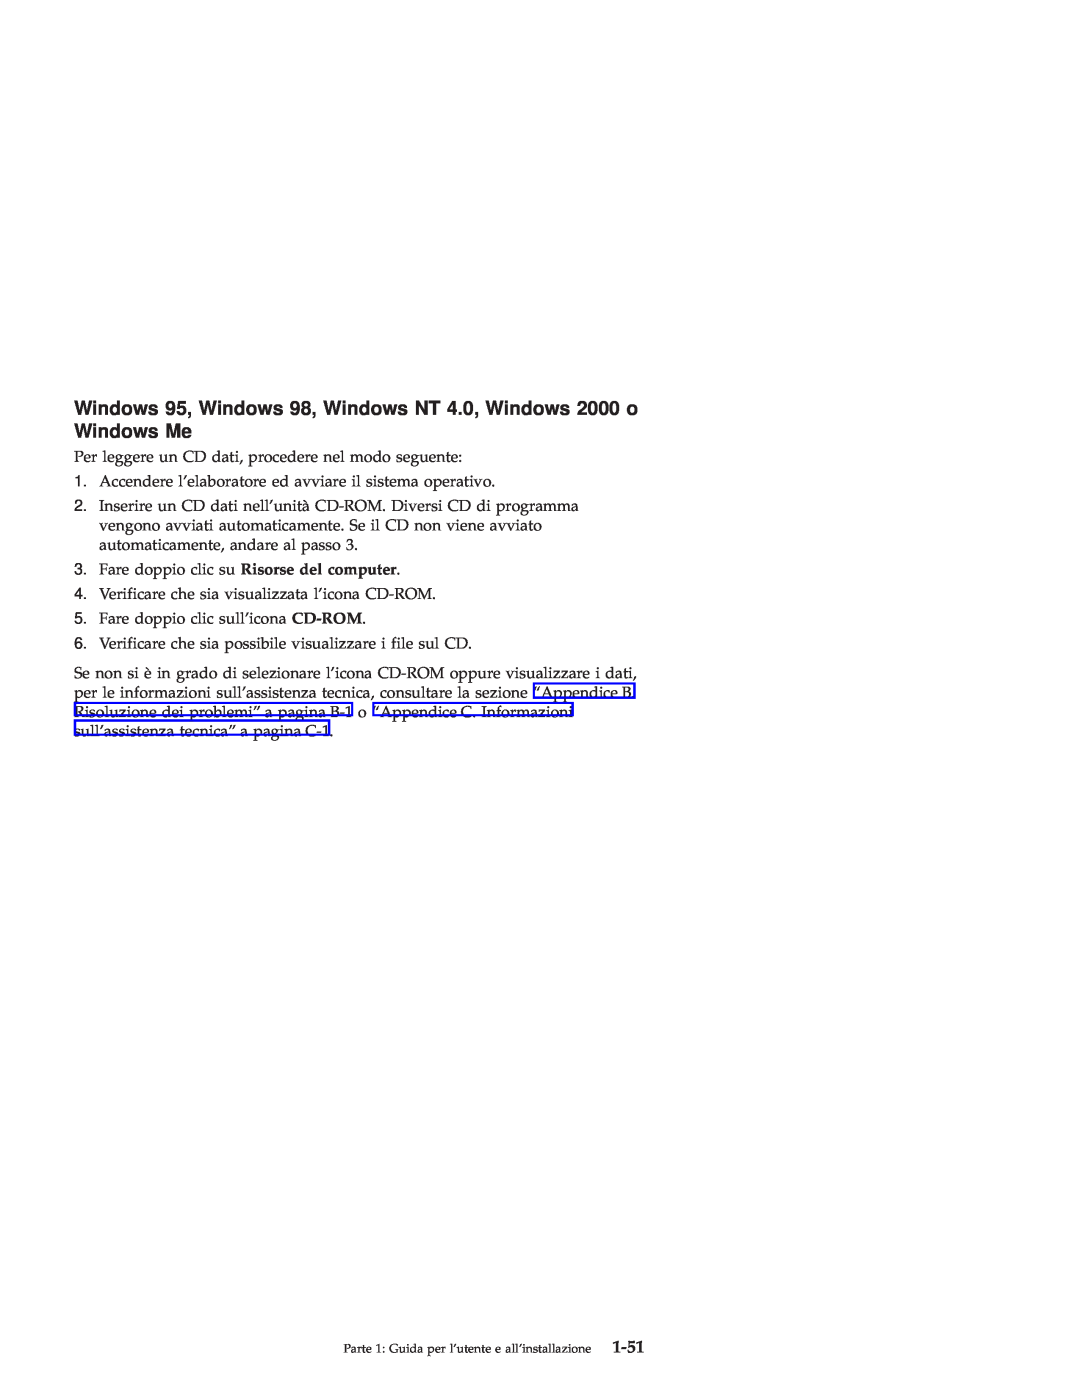 IBM 71P7279 manual 1-51, Windows 95, Windows 98, Windows NT 4.0, Windows 2000 o Windows Me 